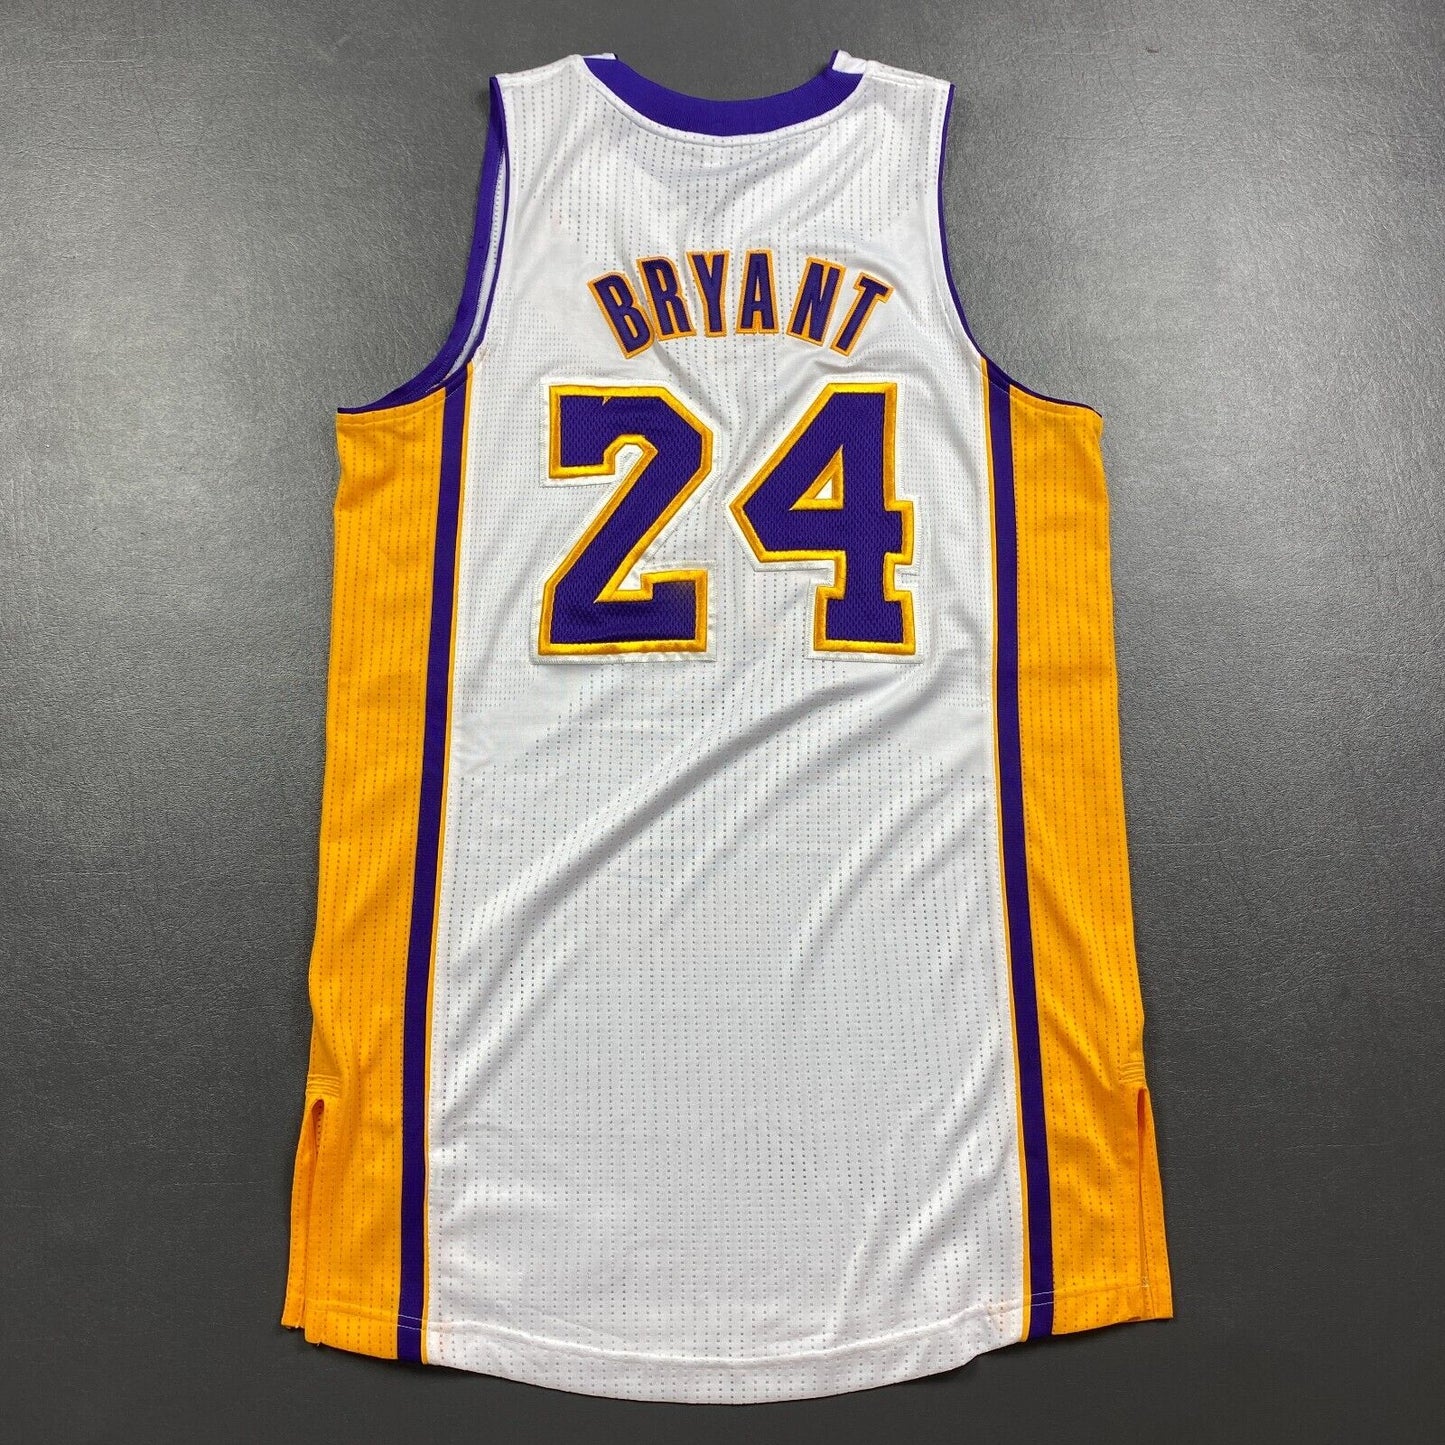 100% Authentic Kobe Bryant 2010 2011 Lakers Jersey Size L 44 Mens Pro Cut Mesh #